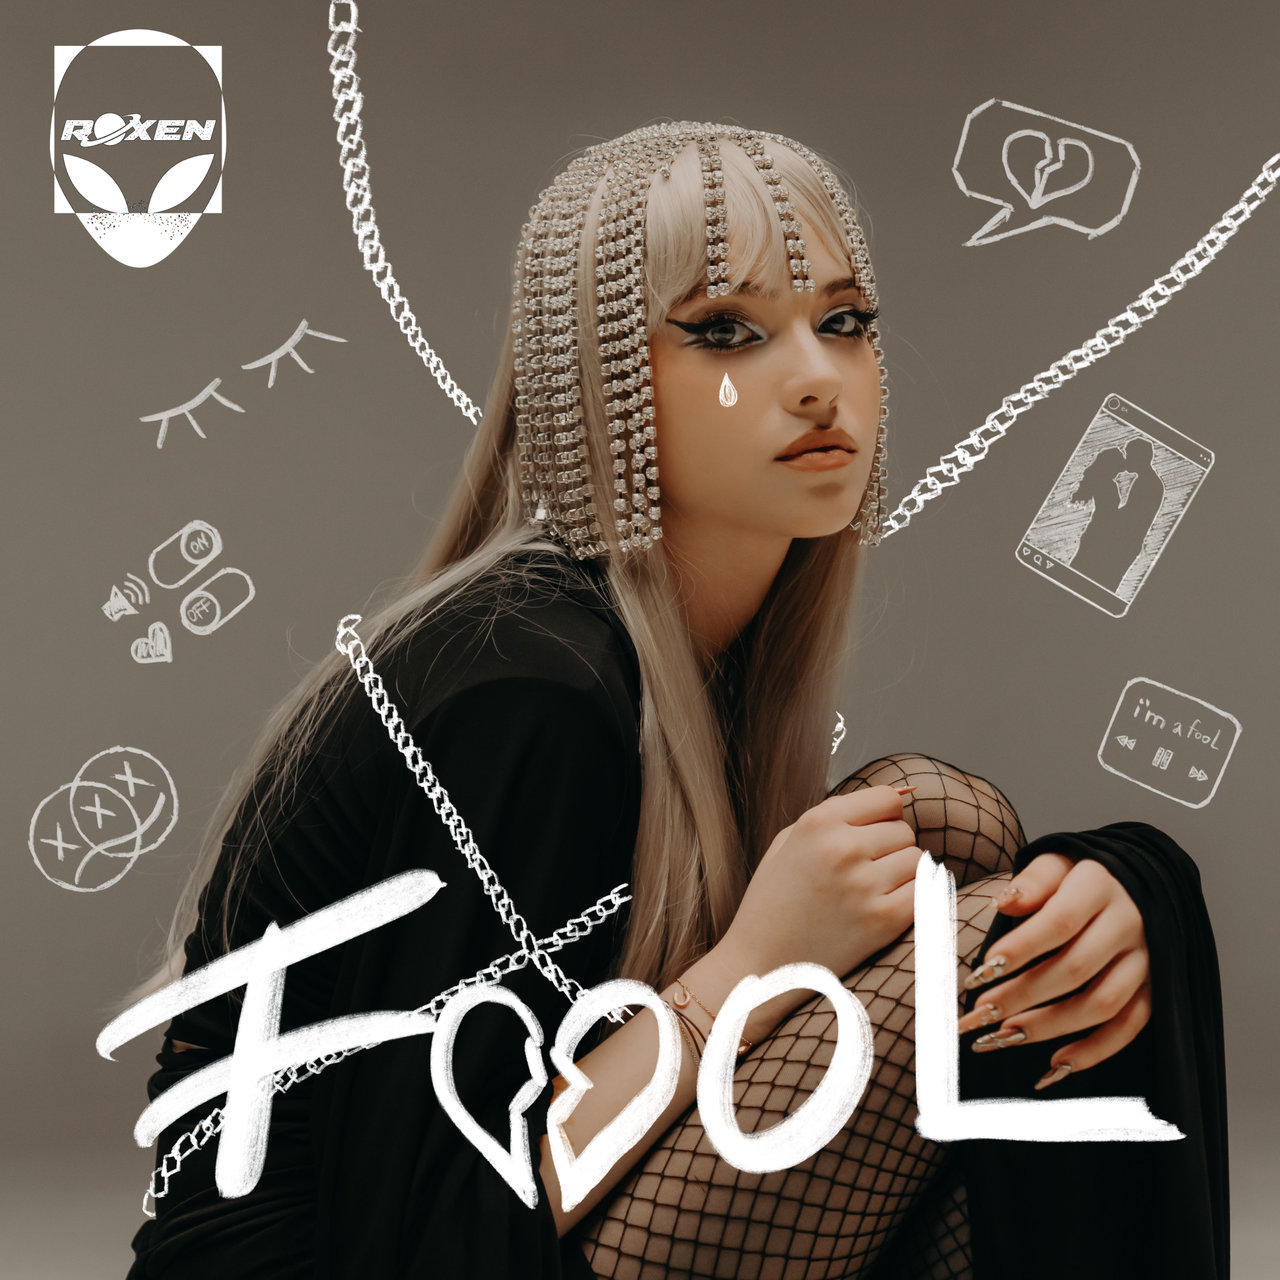 Roxen Fool cover artwork